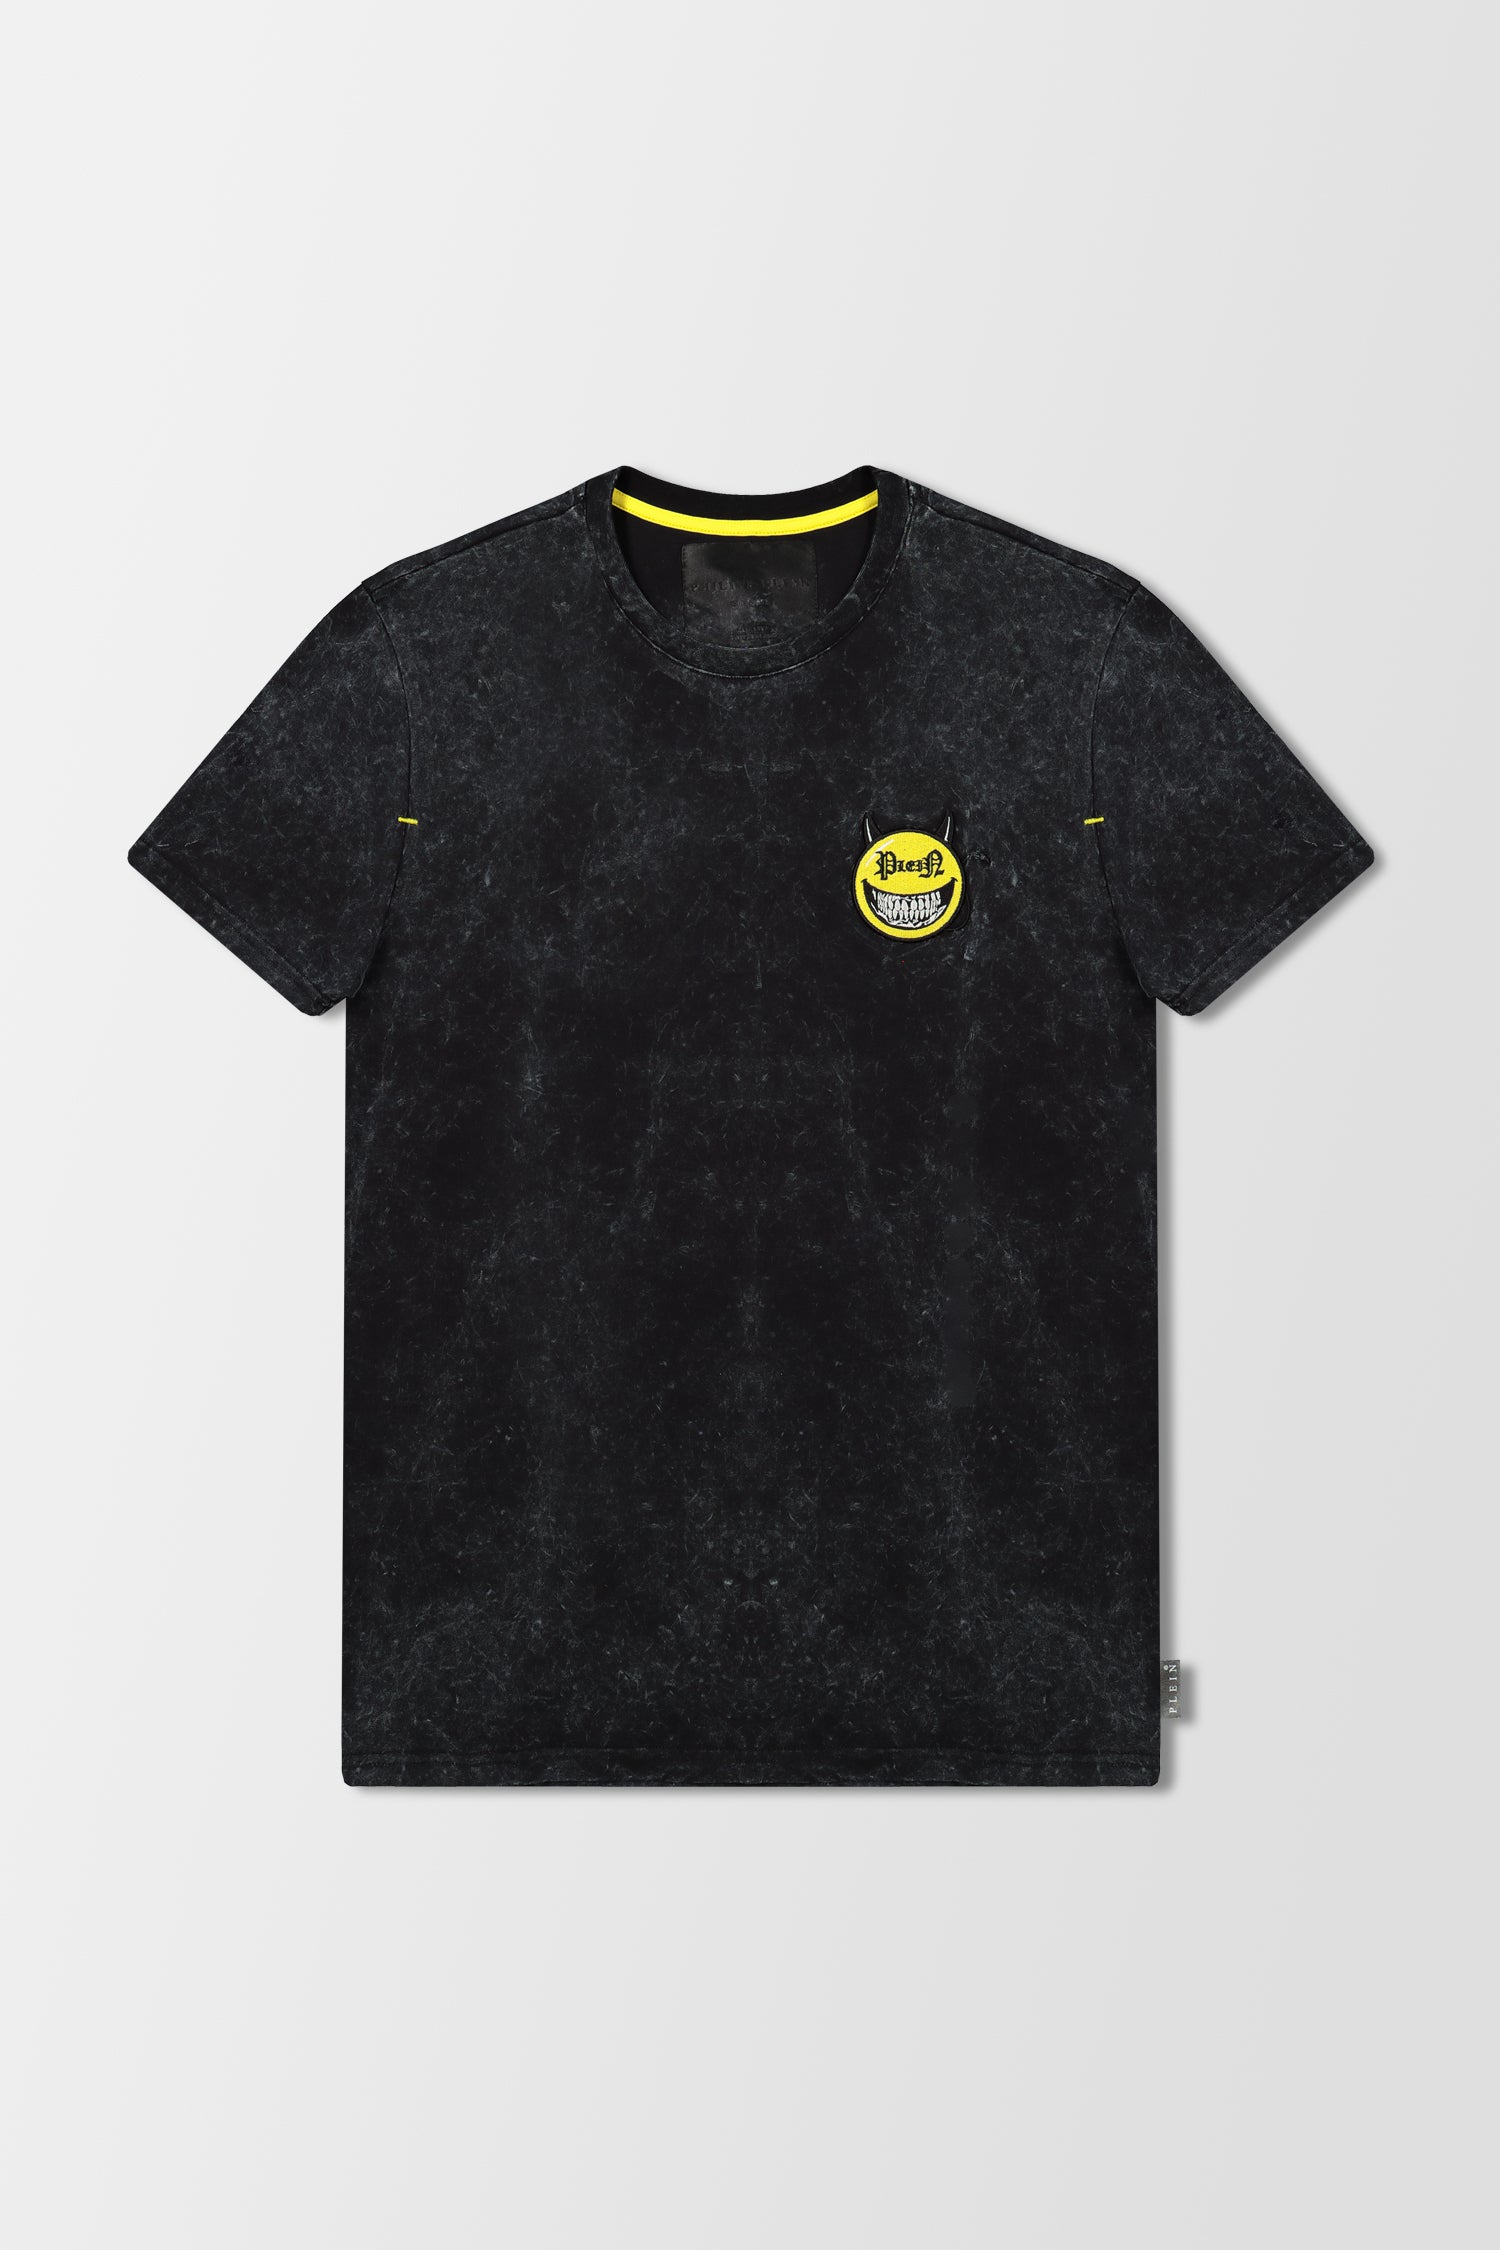 Philipp Plein Black Round Neck  SS Evil Smile T-Shirt